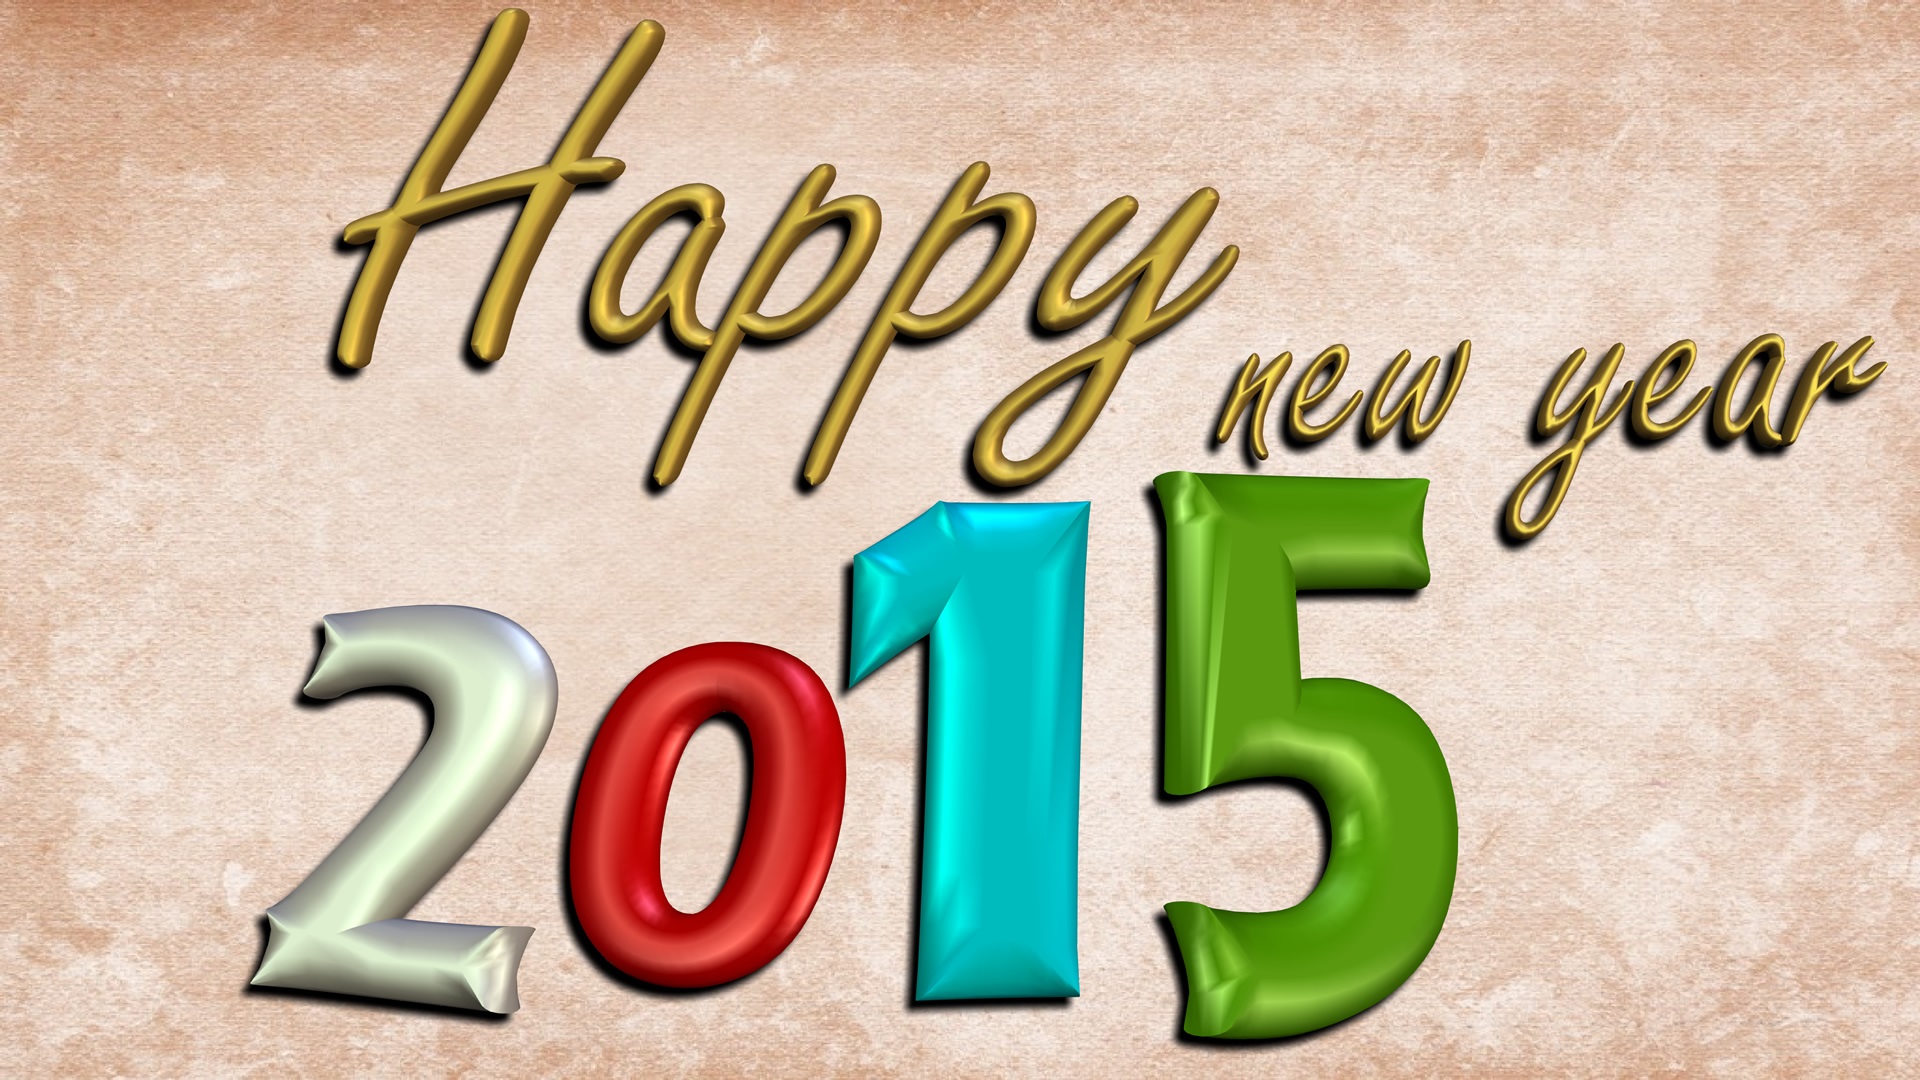 New Year 2015 Clipart Image Wallpaper  6495 Wallpaper Computer   Best